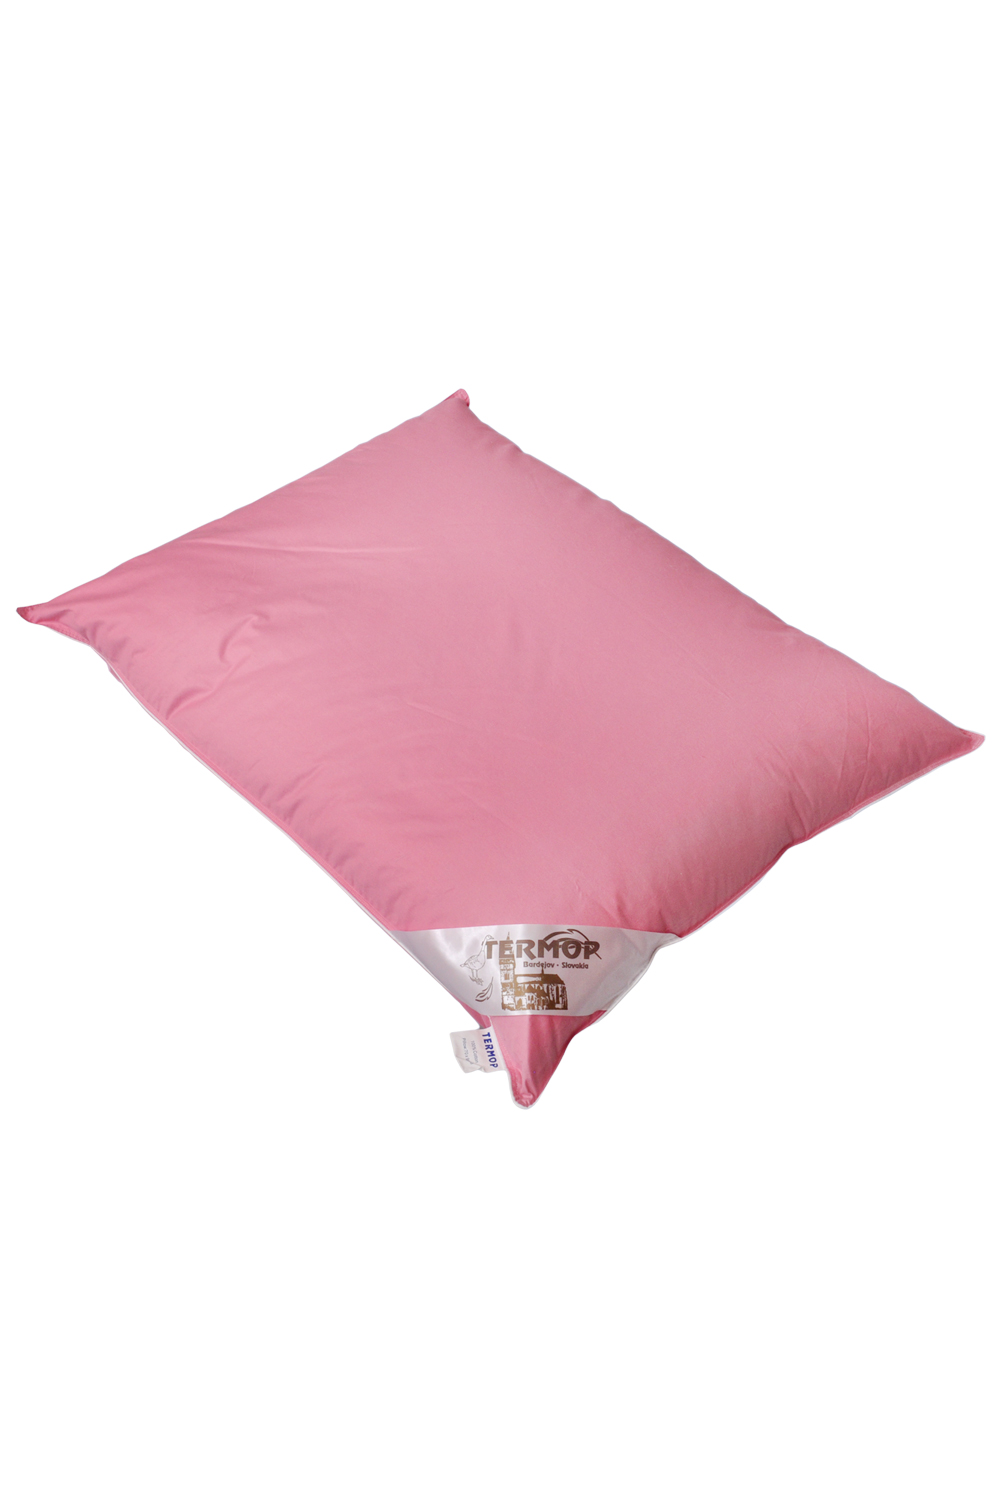 Polštář TERMOP Luxus - růžový